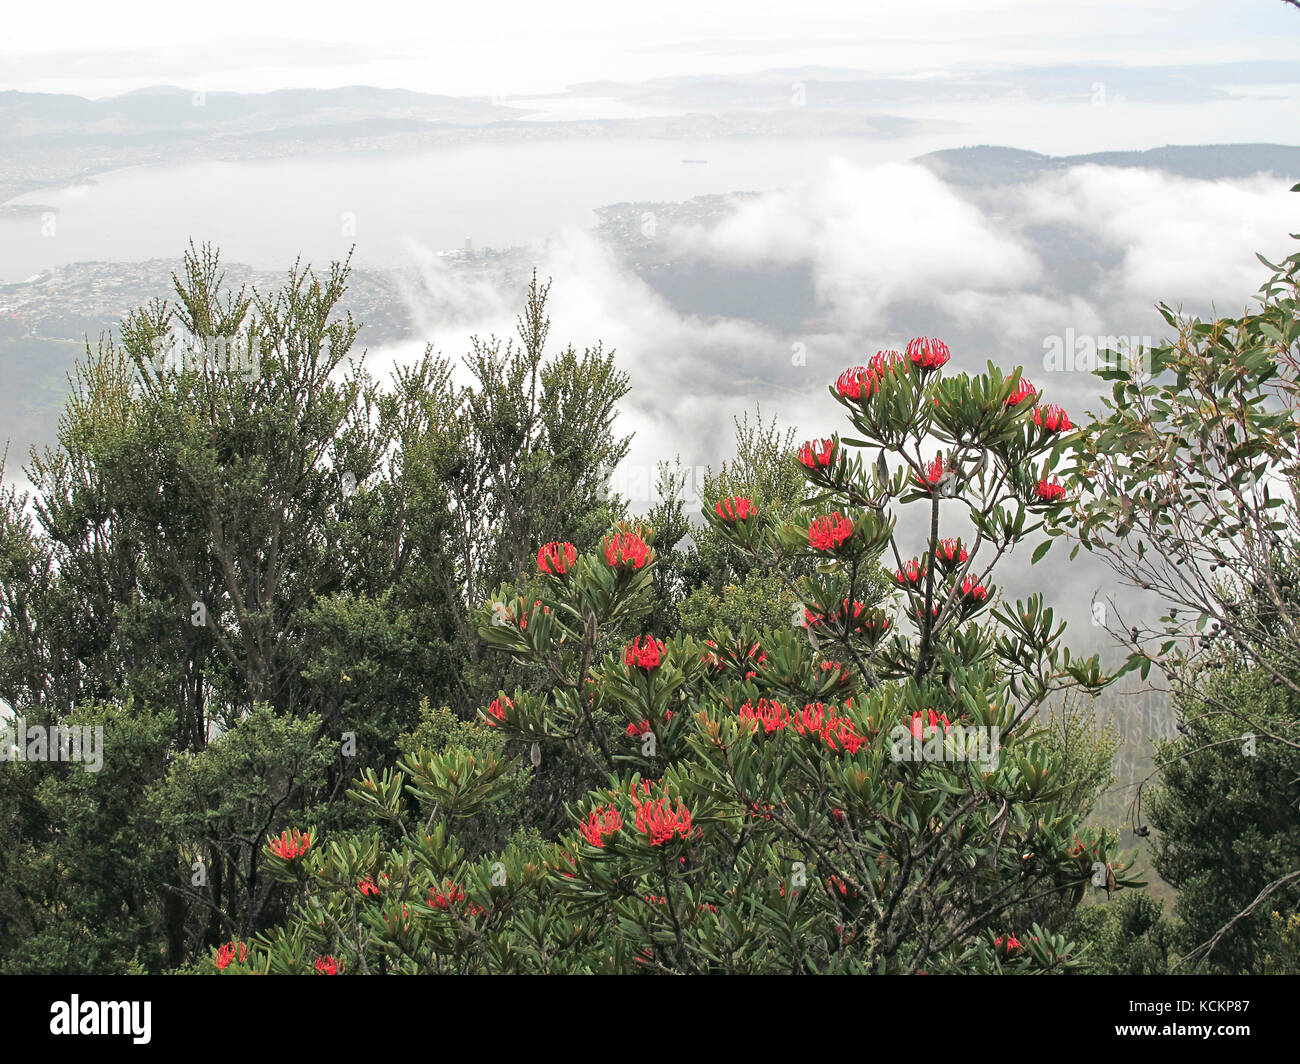 waratah tasmanienne (Telope truncata), en fleur. Mount Wellington, Hobart, Tasmanie, Australie Banque D'Images